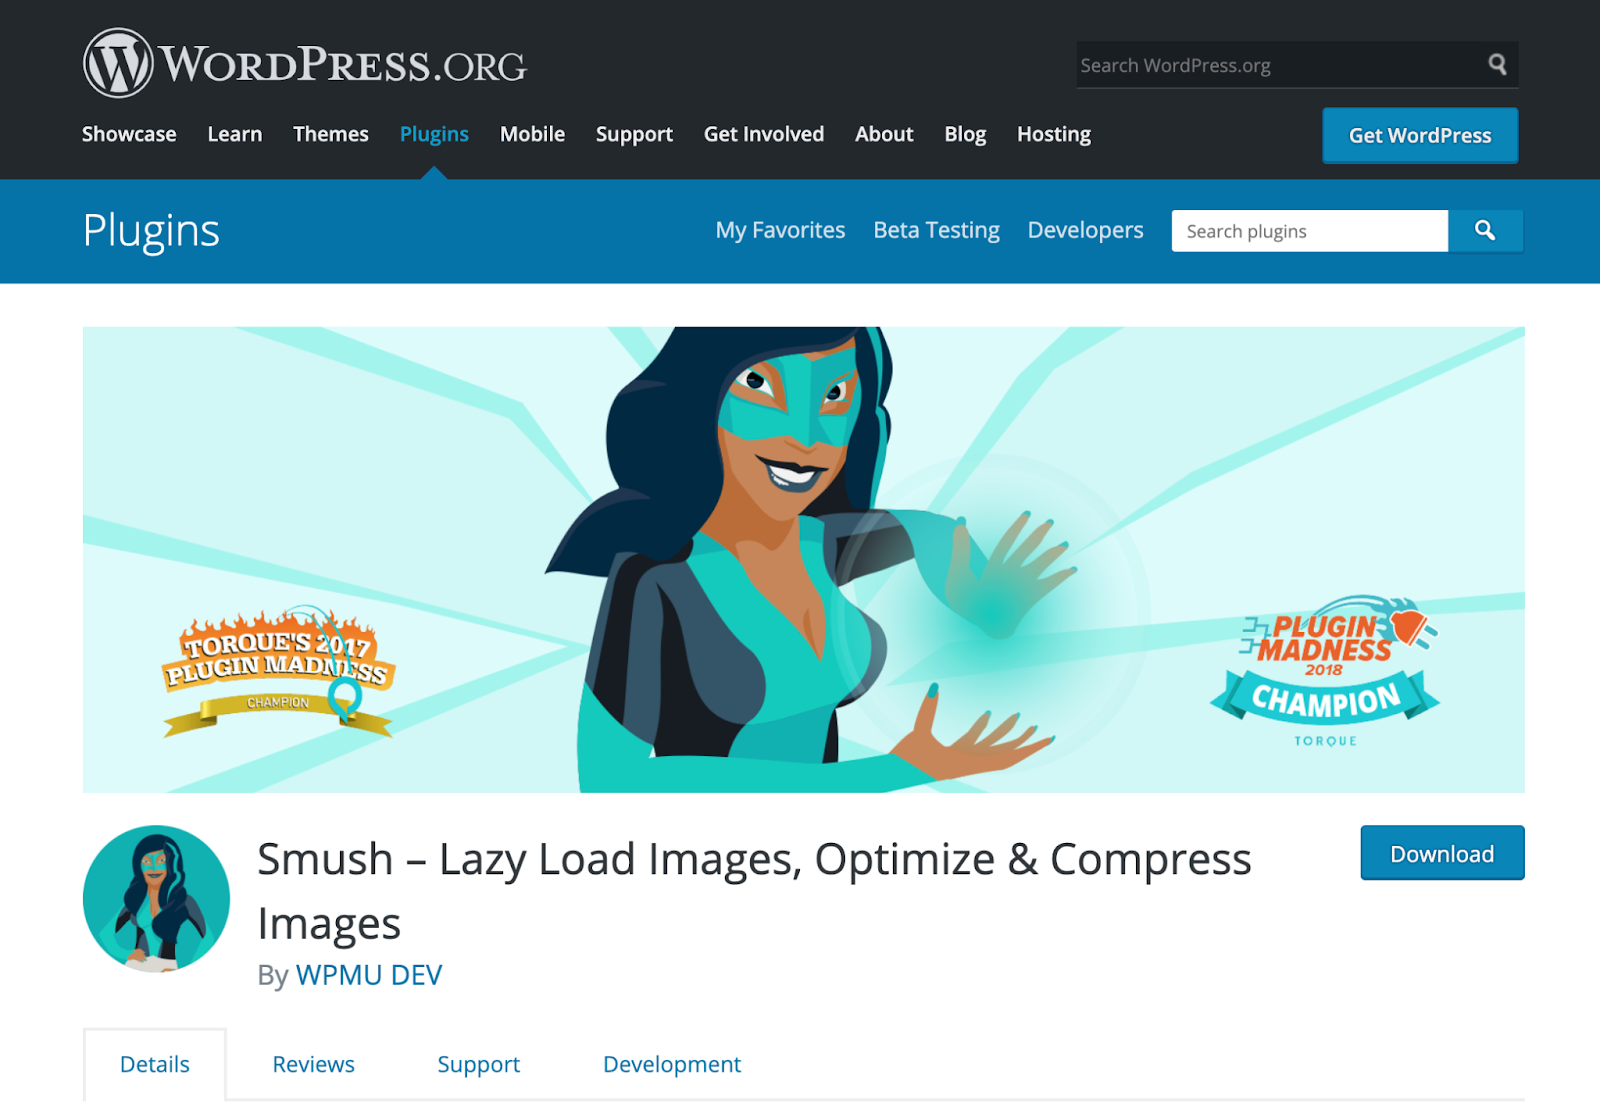 WP Smush – Plugins for Web Design Businesses